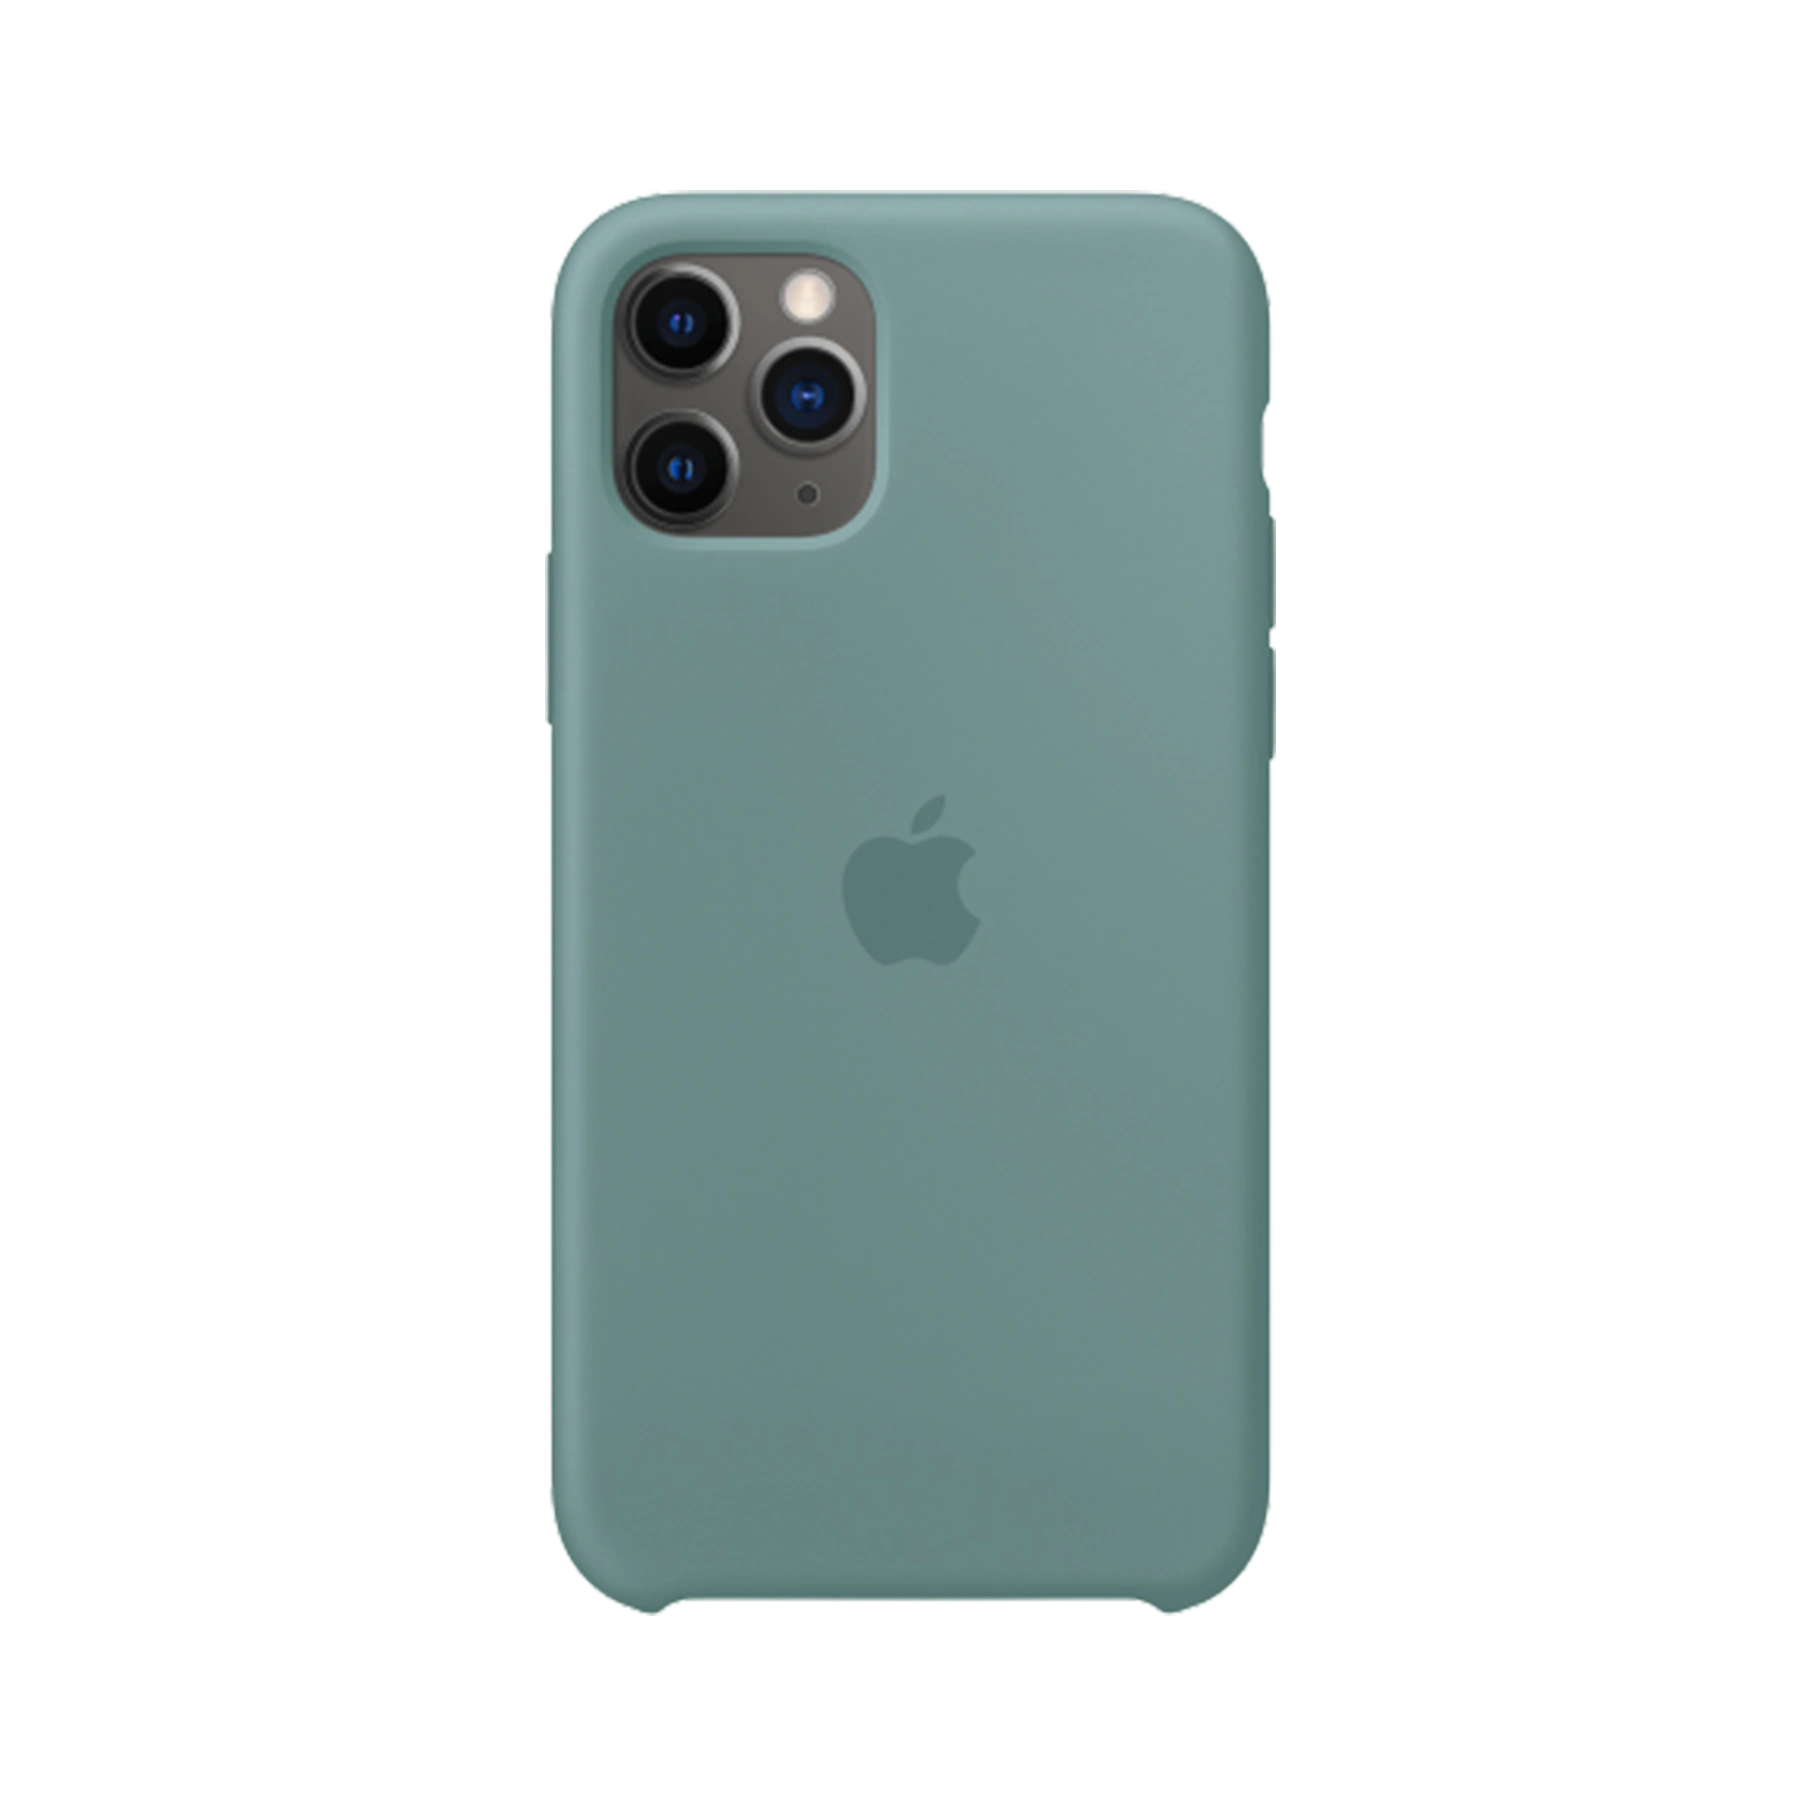 hc-iphone-11-pro-max-silicone-case